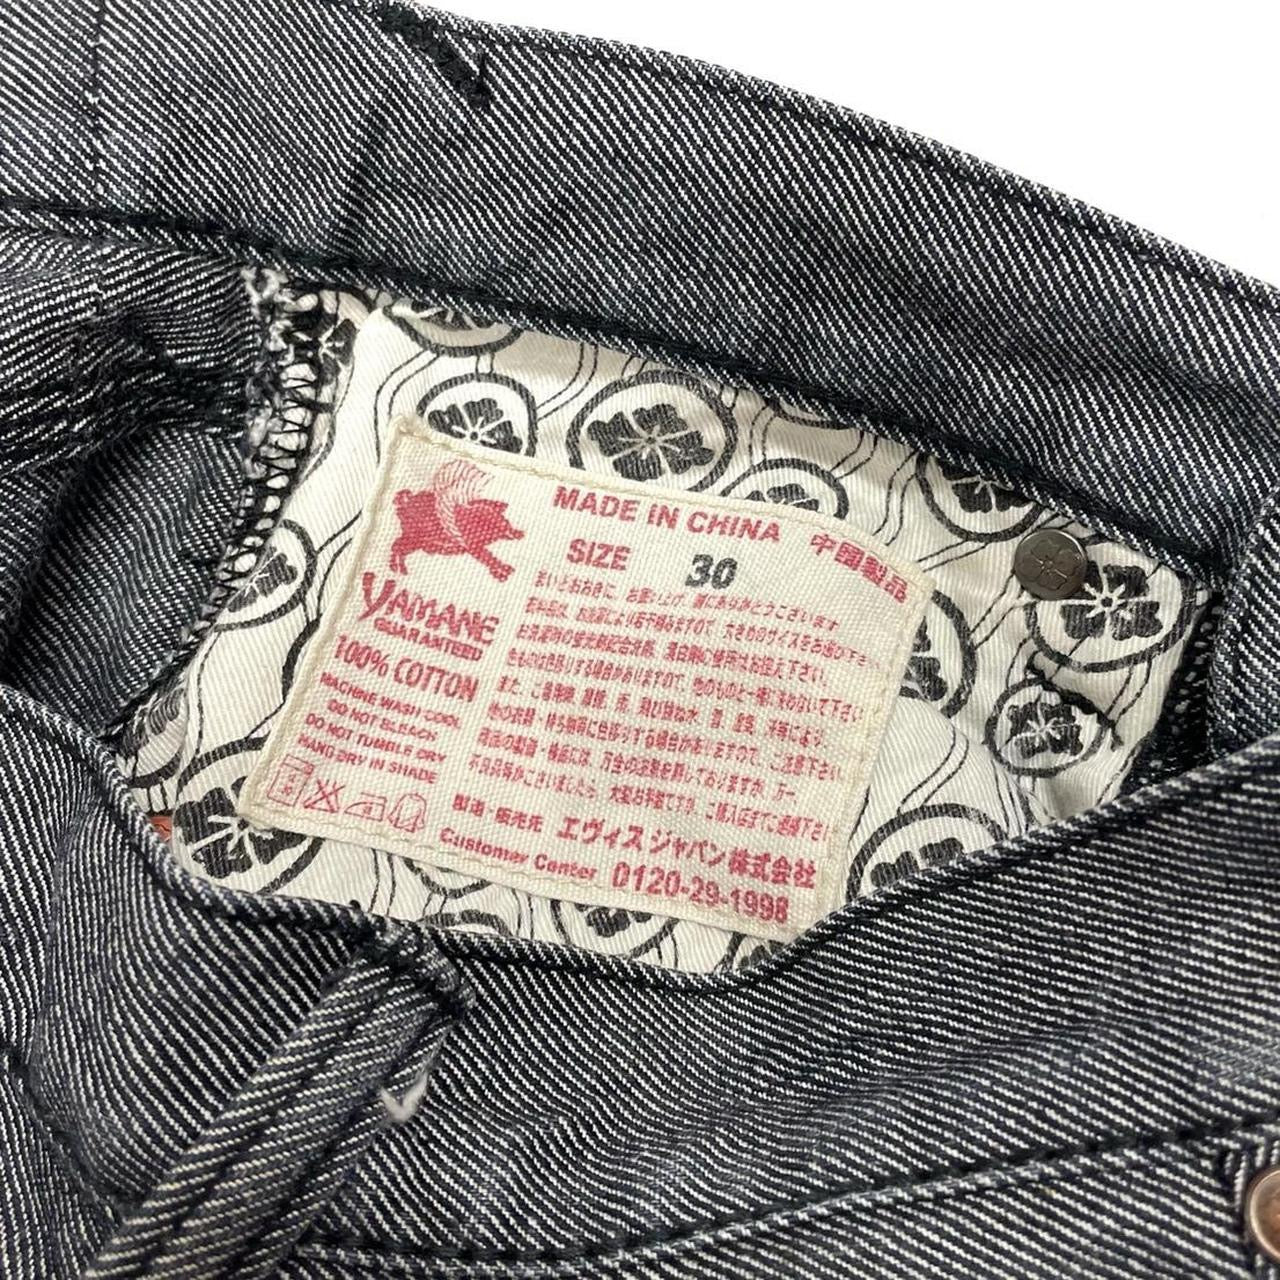 Evisu Yamane Selvedge Jeans With Daicock & Fish Embroidery ( W30 )